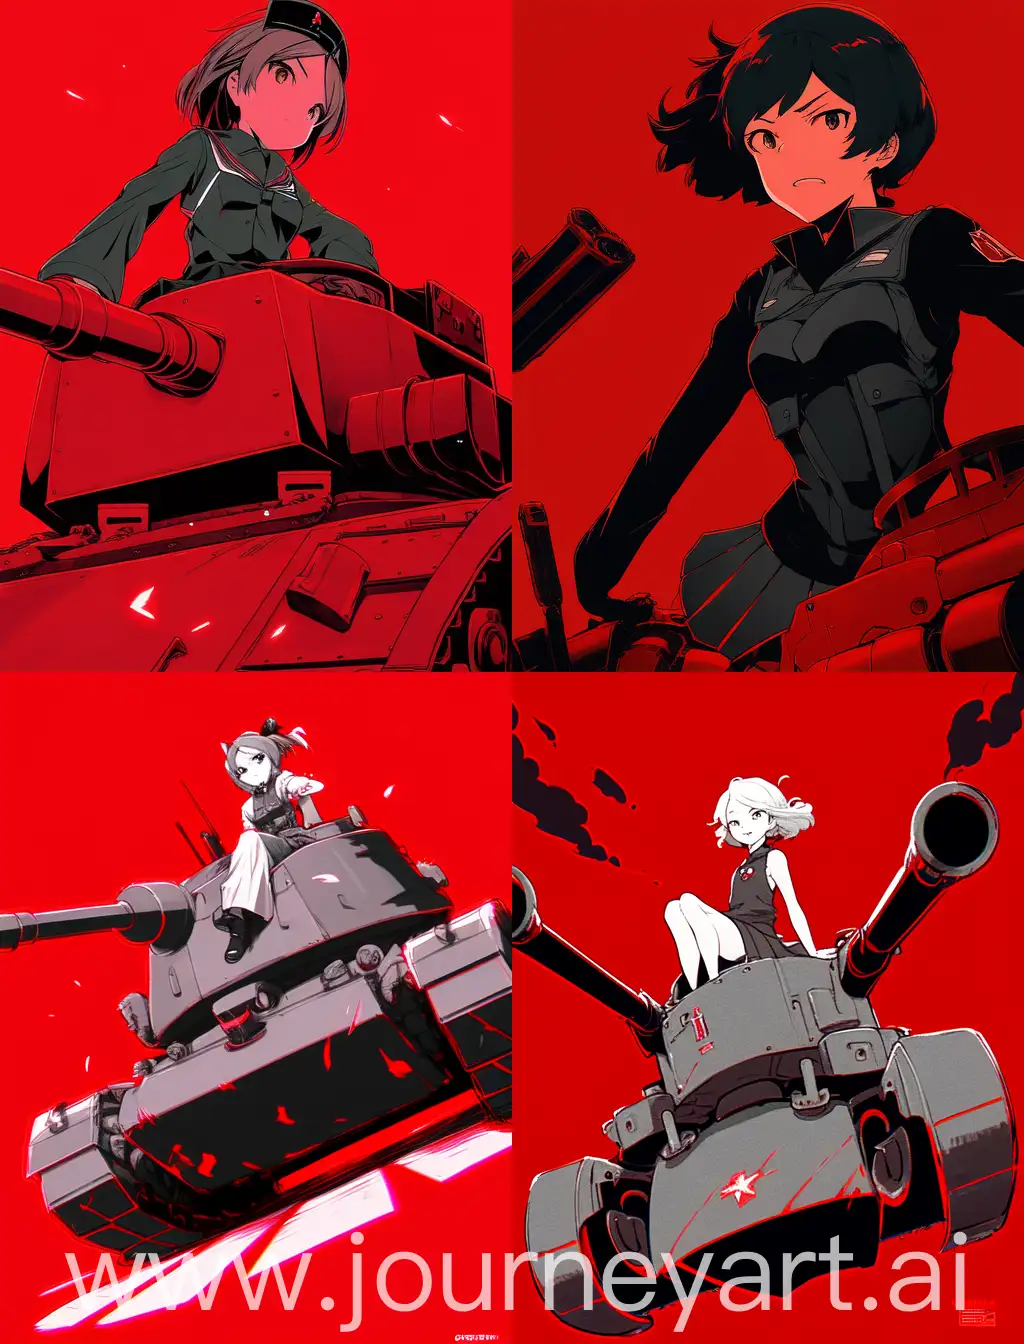 Anime-Girl-Riding-Tank-Powerful-Cartoon-Art-on-Red-Background